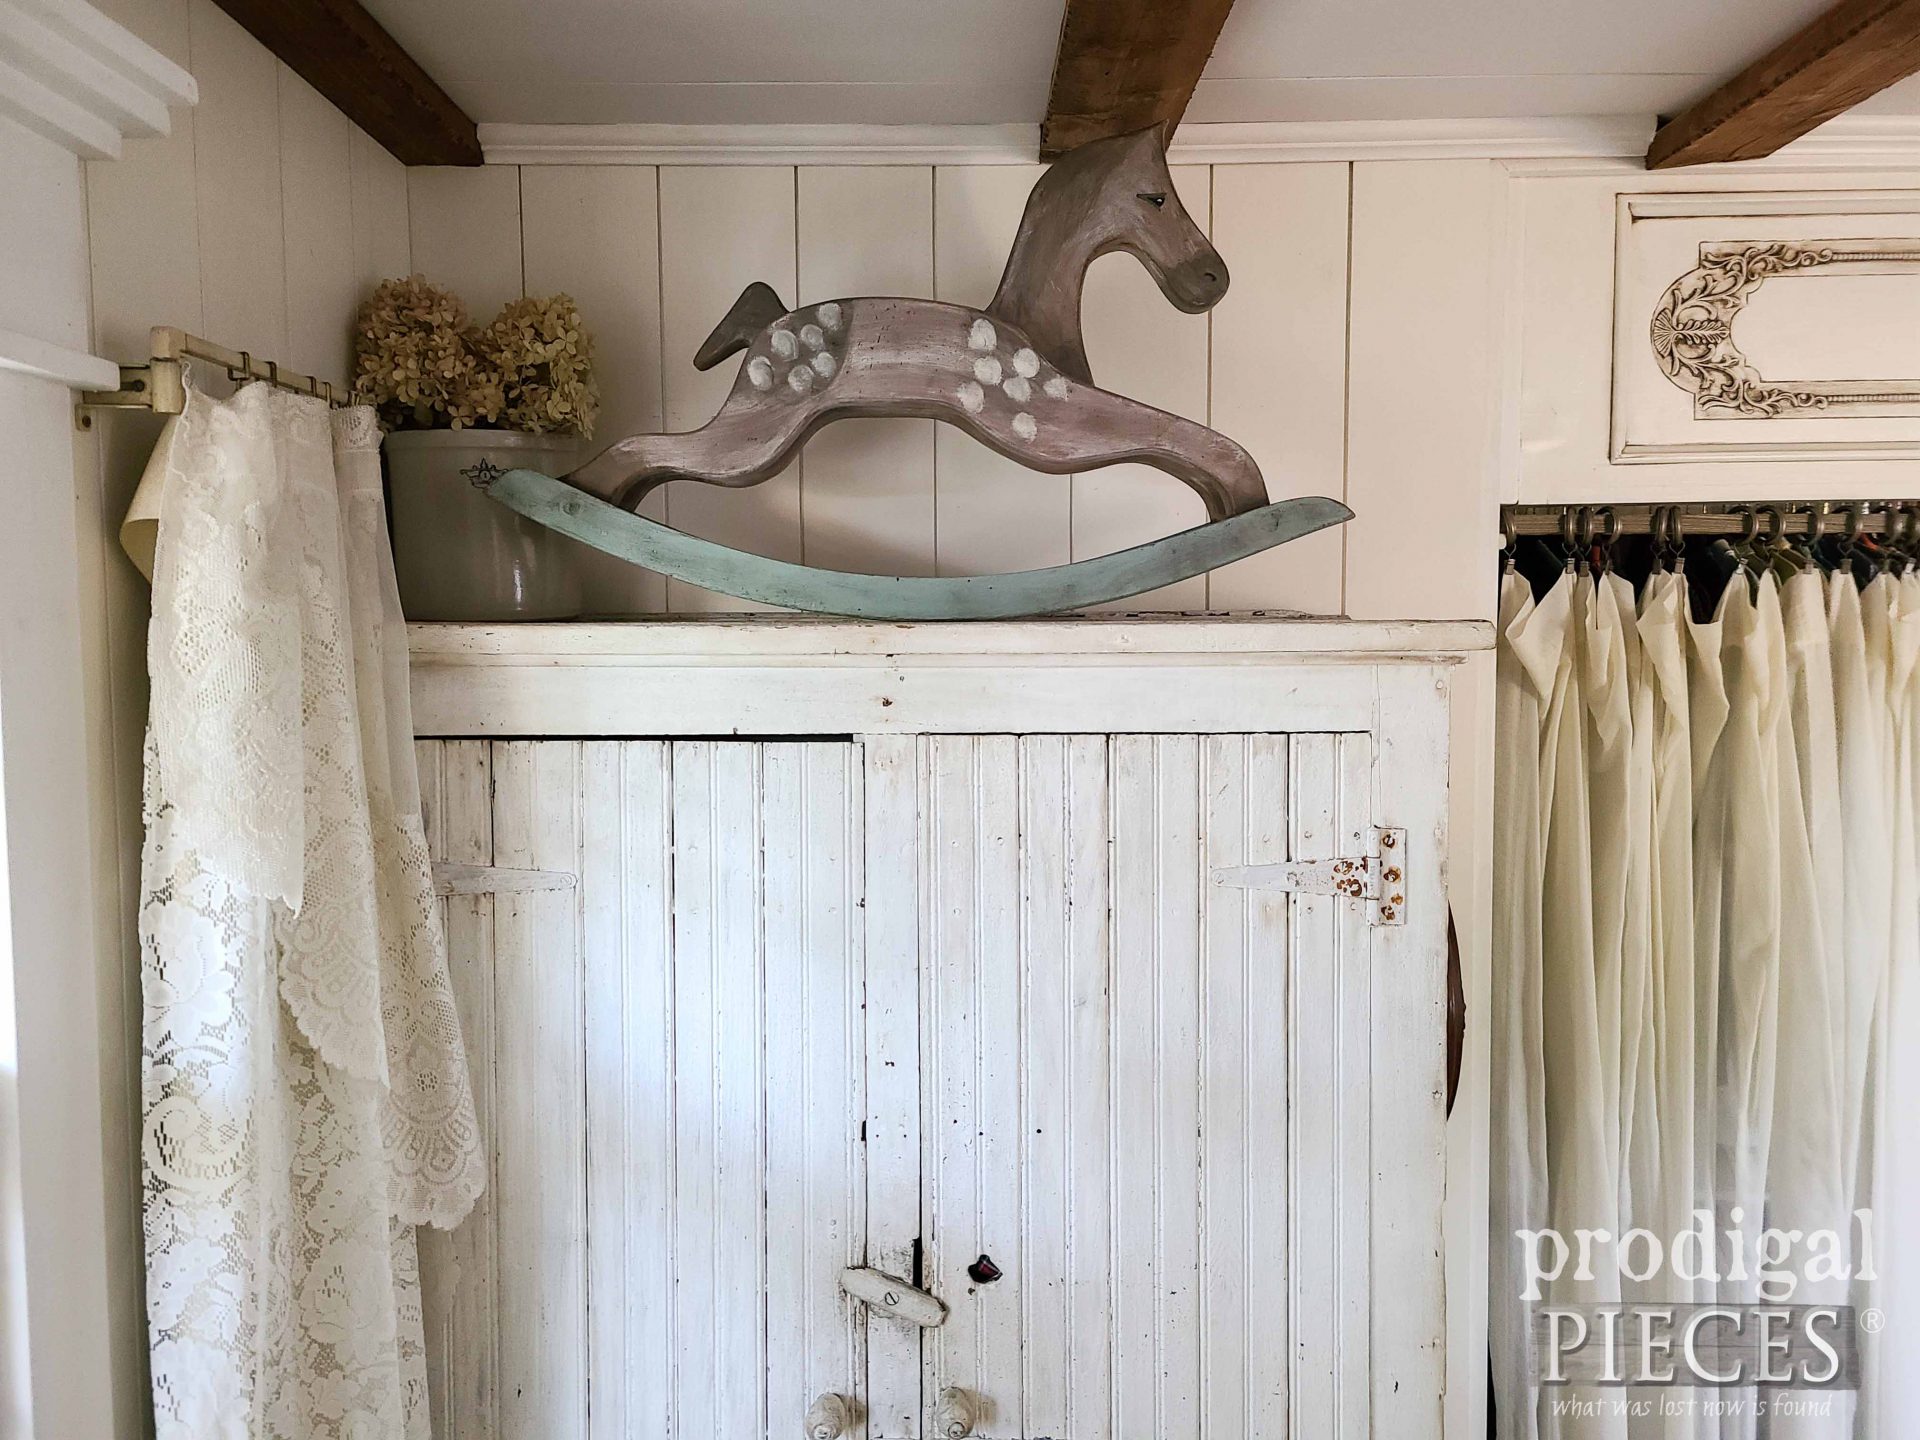 DIY Handmade Antique Rocking Horse for Farmhouse Decor by Larissa of Prodigal Pieces | prodigalpieces.com #prodigalpieces #handmade #home #diy #horse #farmhouse